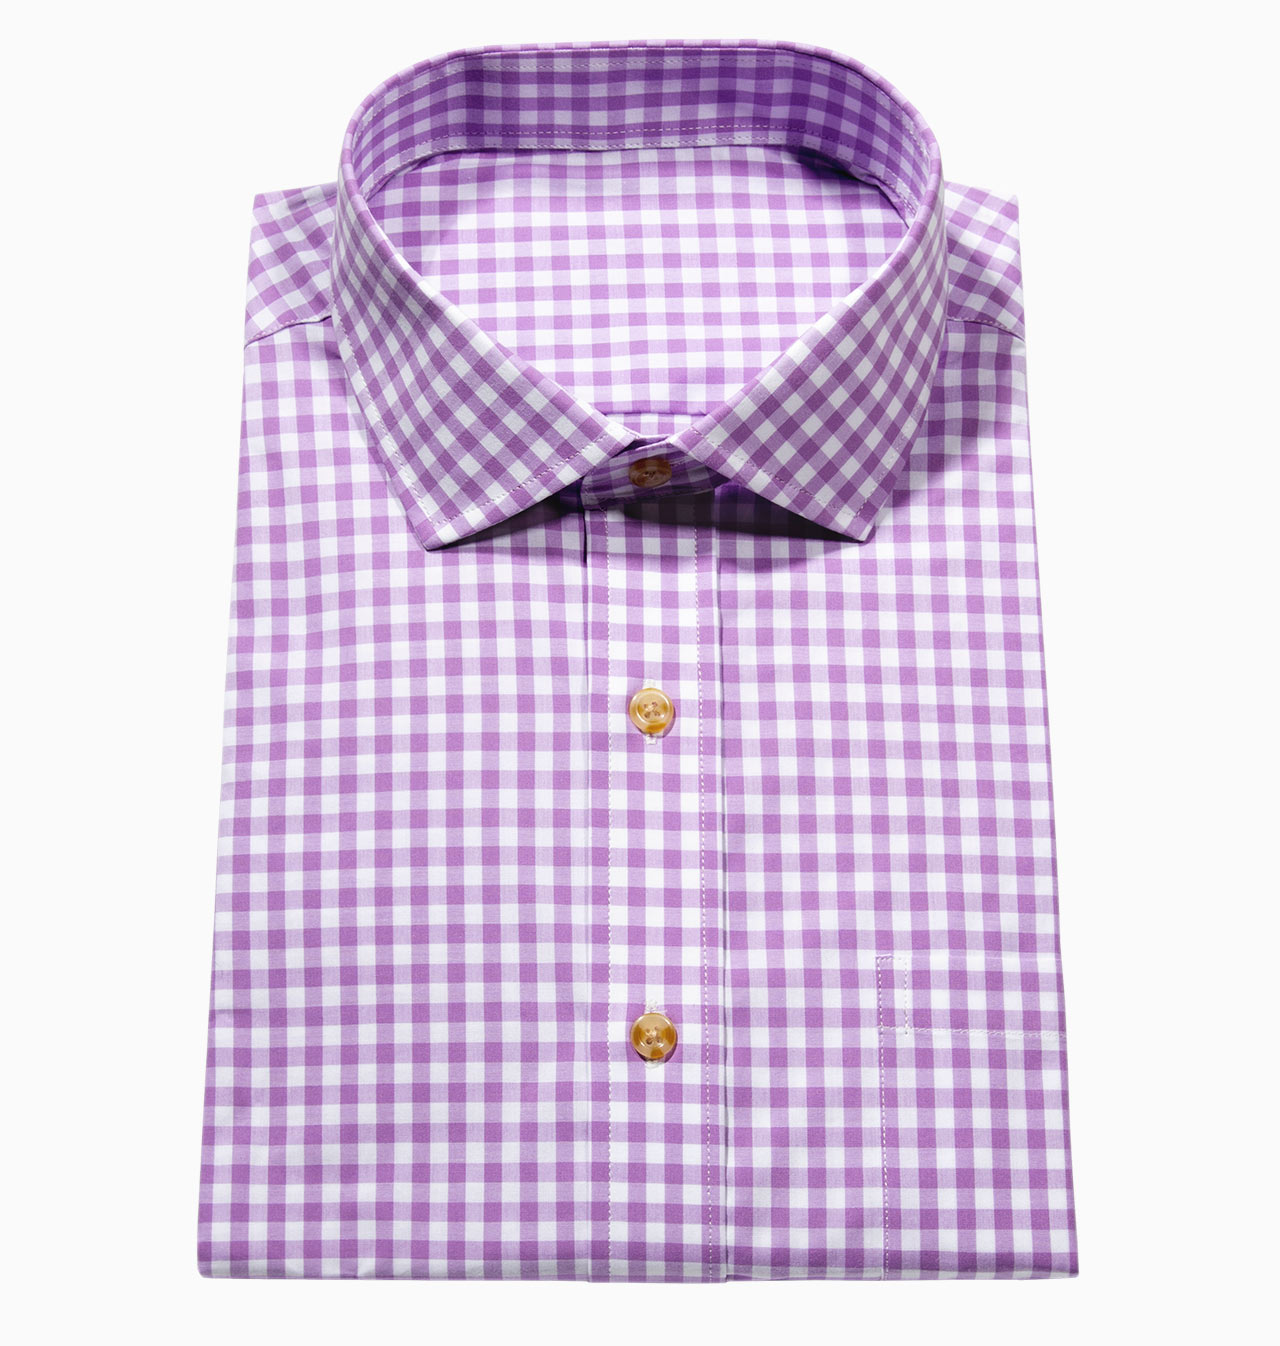 Shirts › Transitional › Lilac Gingham / 1721 Standard